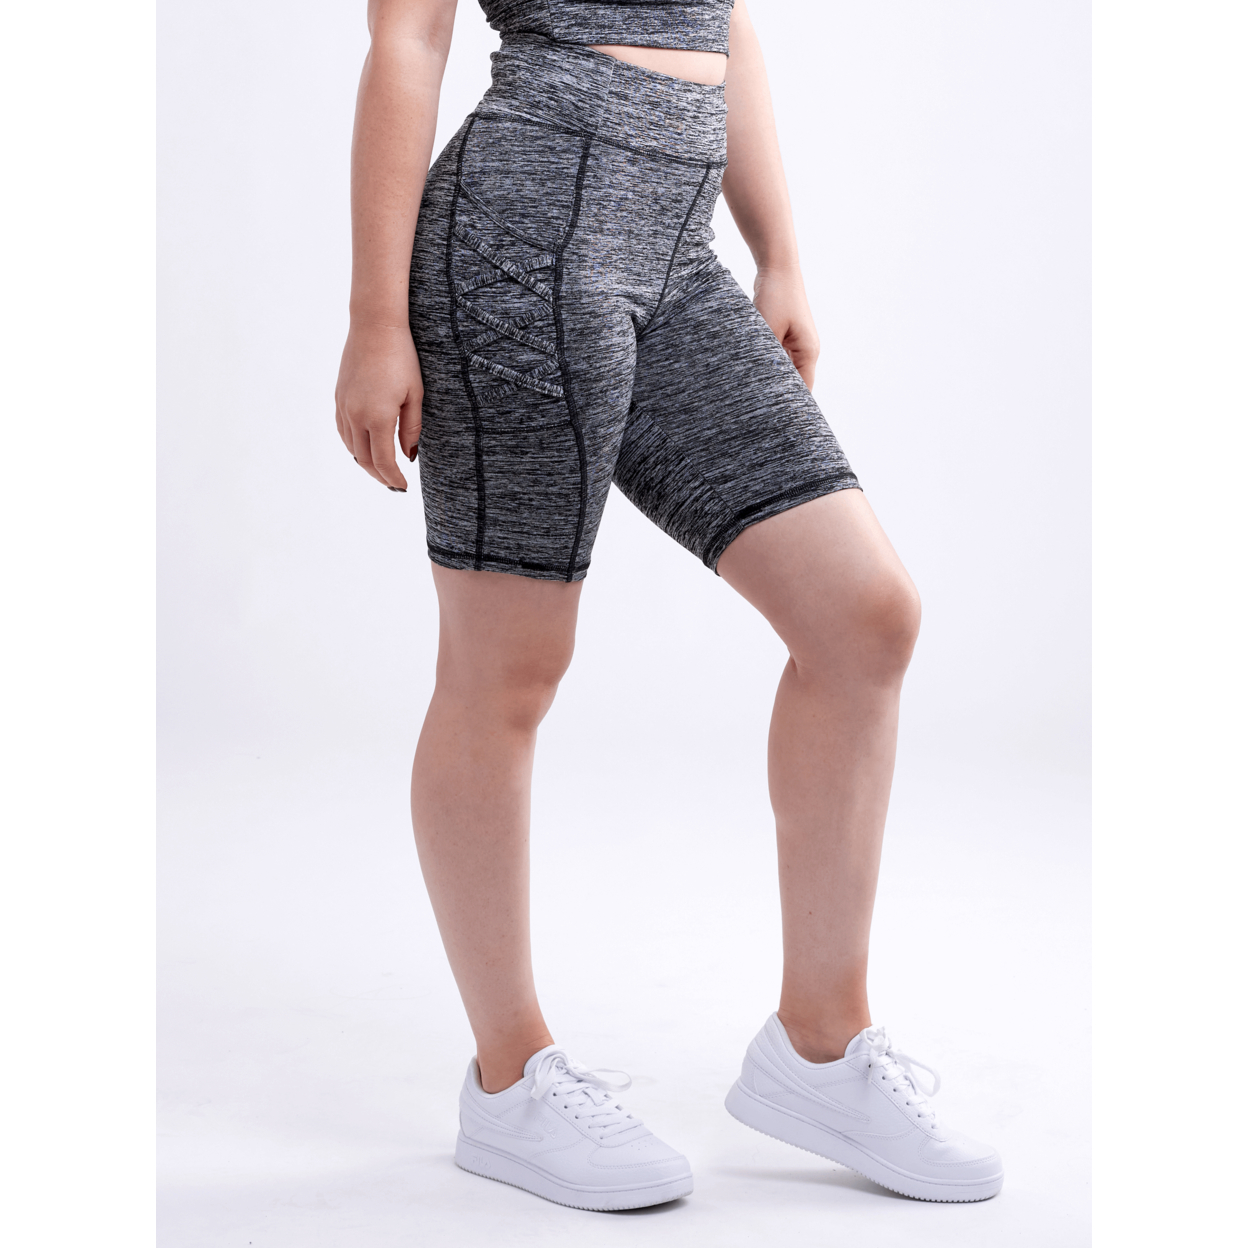 High-Waisted Workout Shorts With Pockets & Criss Cross Design - Grey, Small / Medium